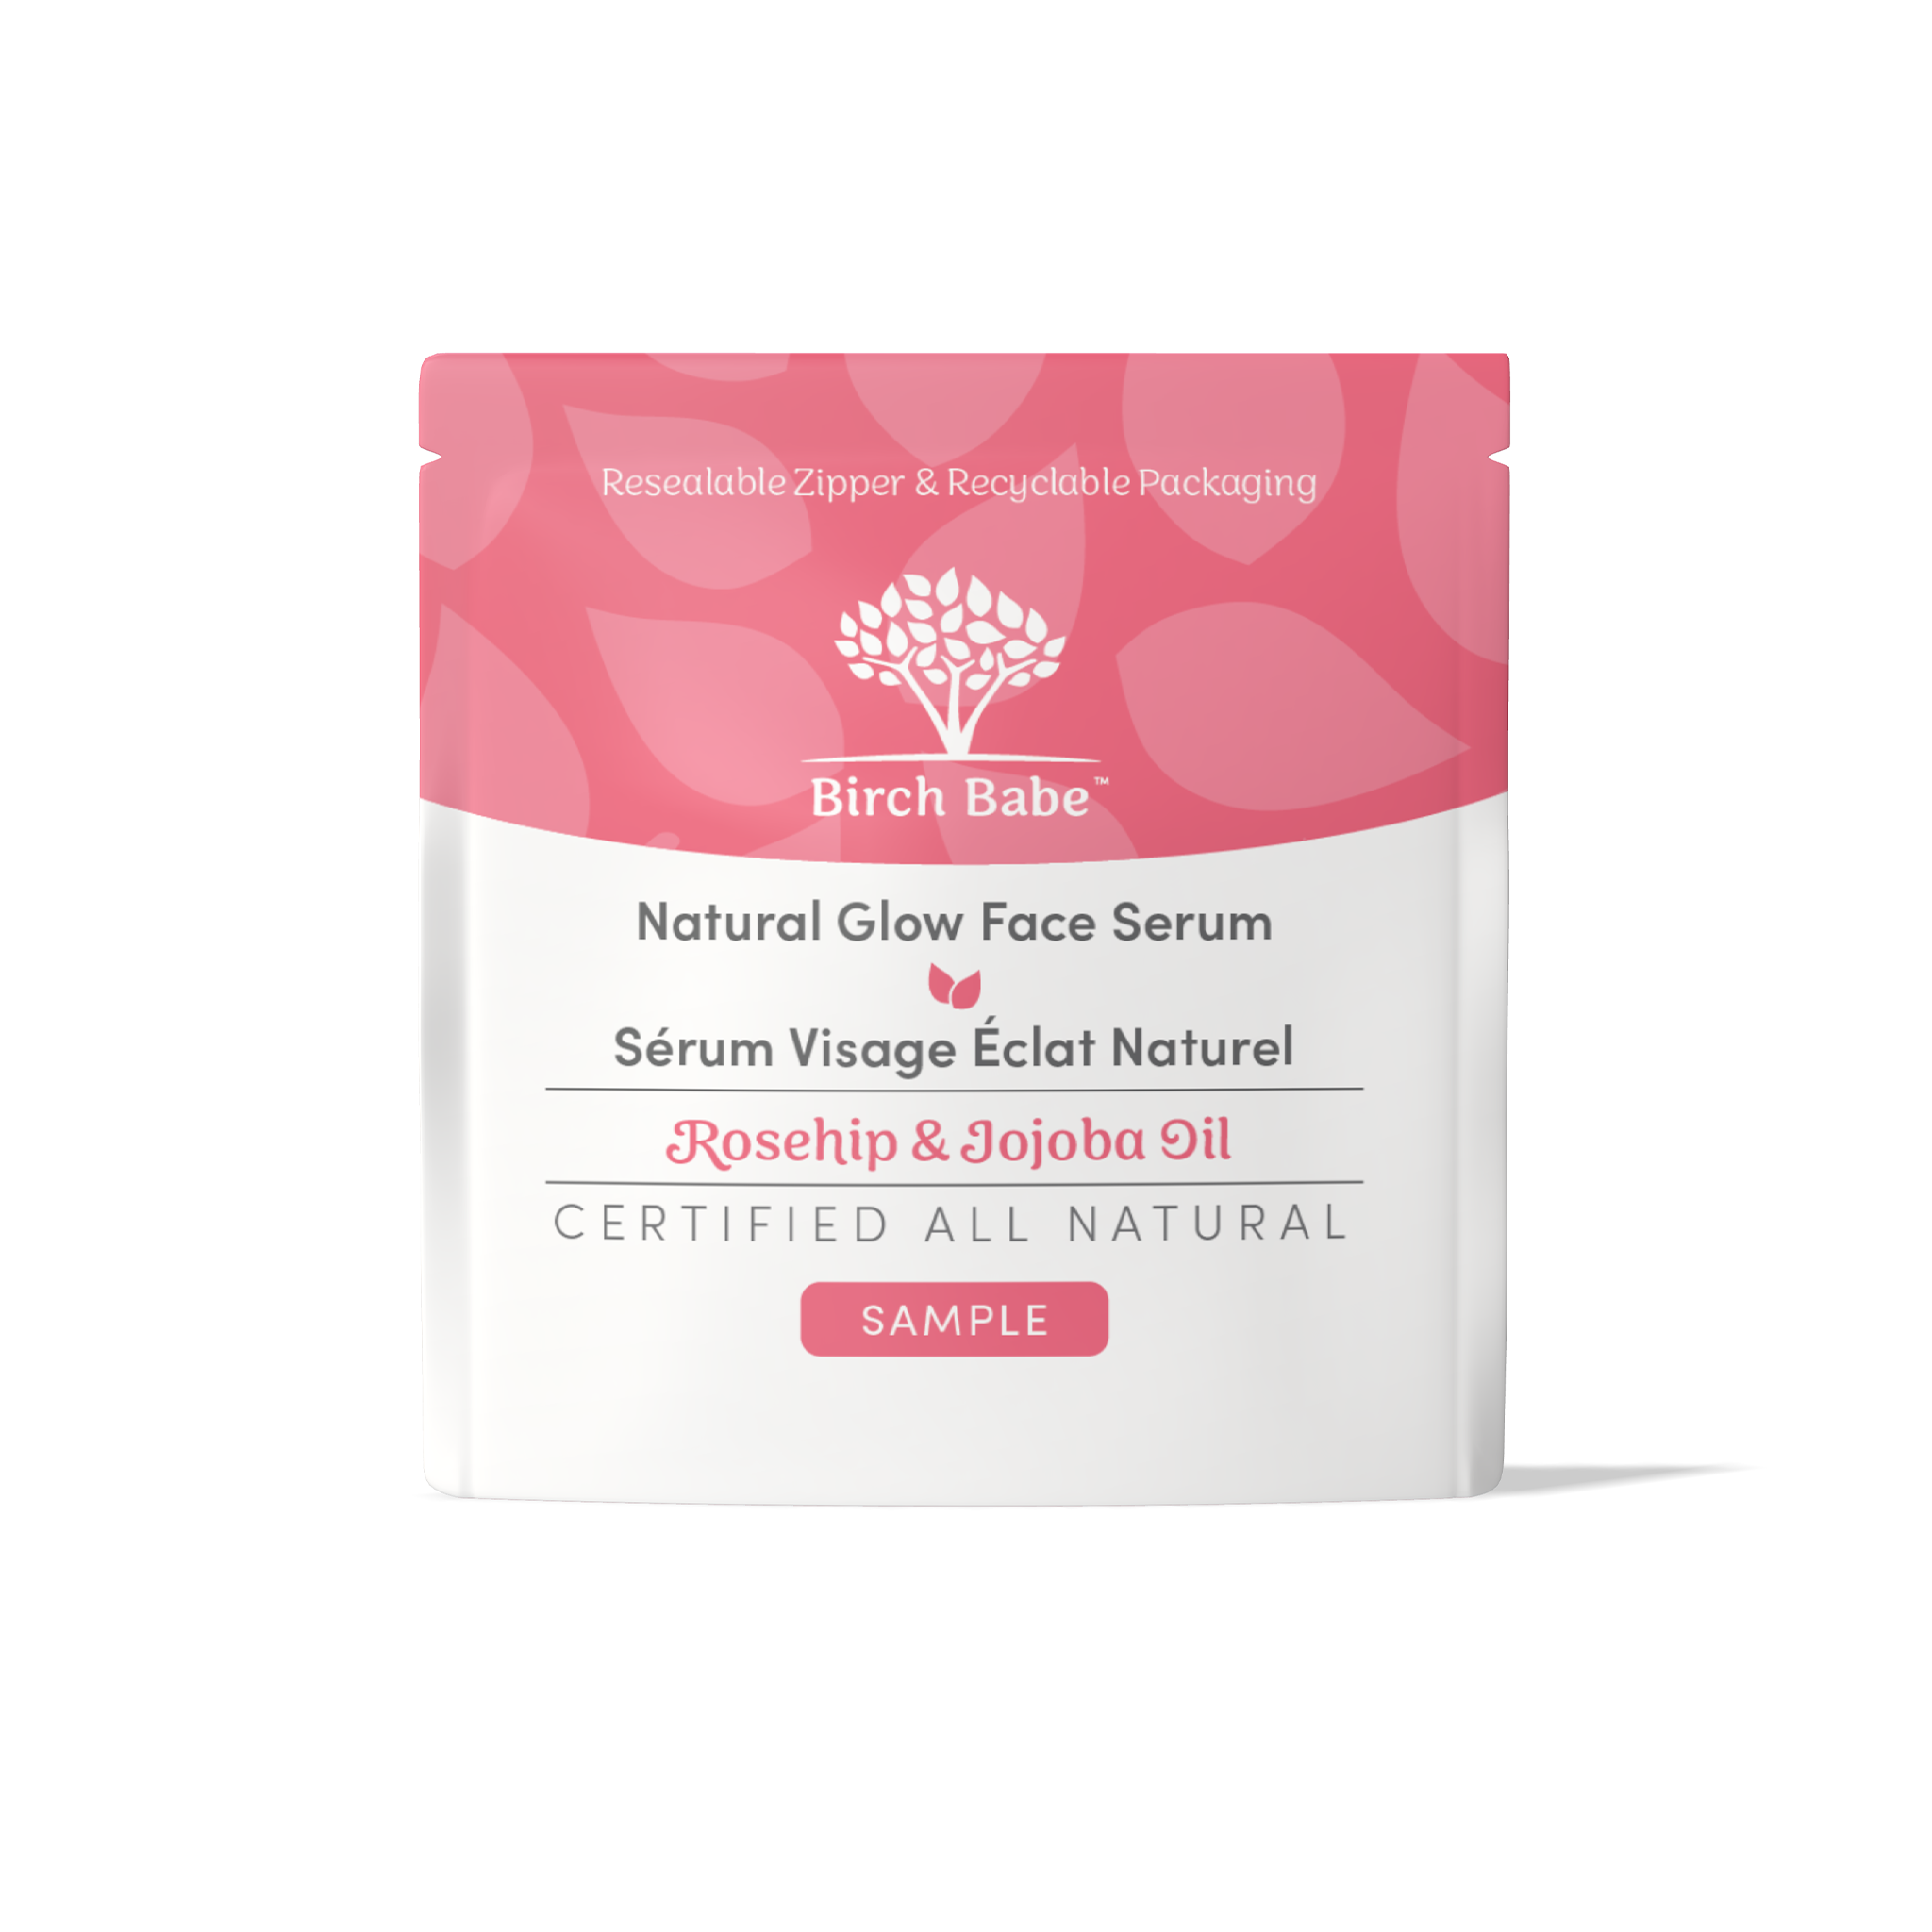 Natural Glow Face Serum - Sample